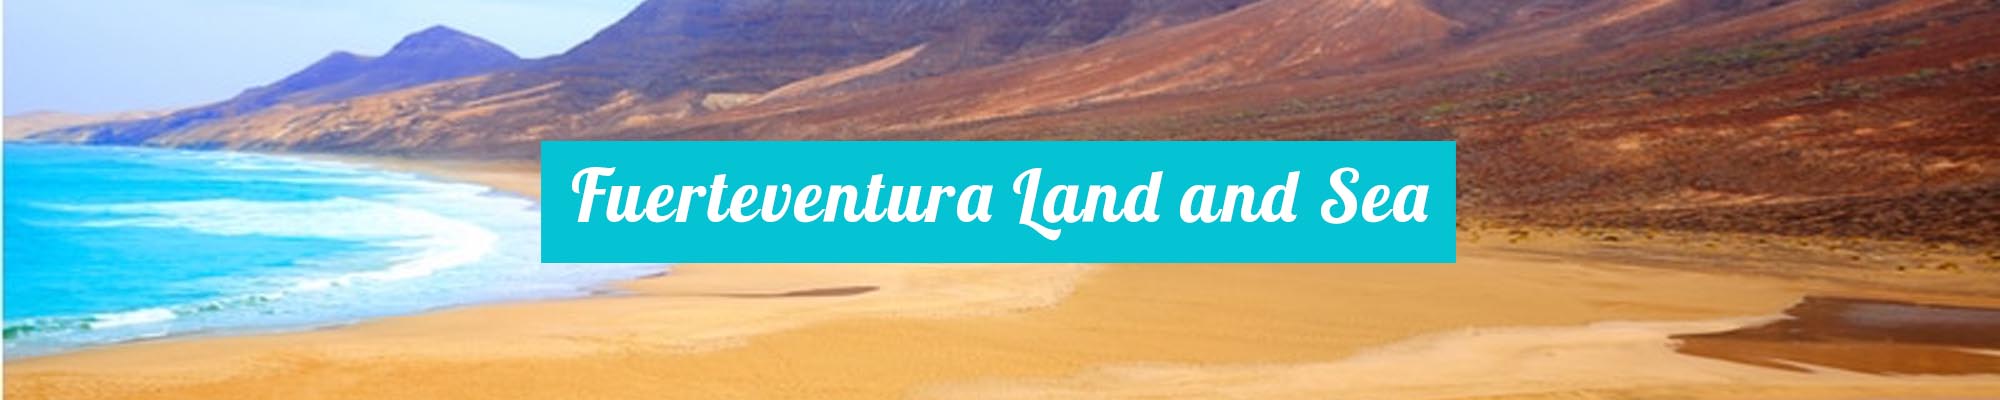 Fuerteventura Land and Sea